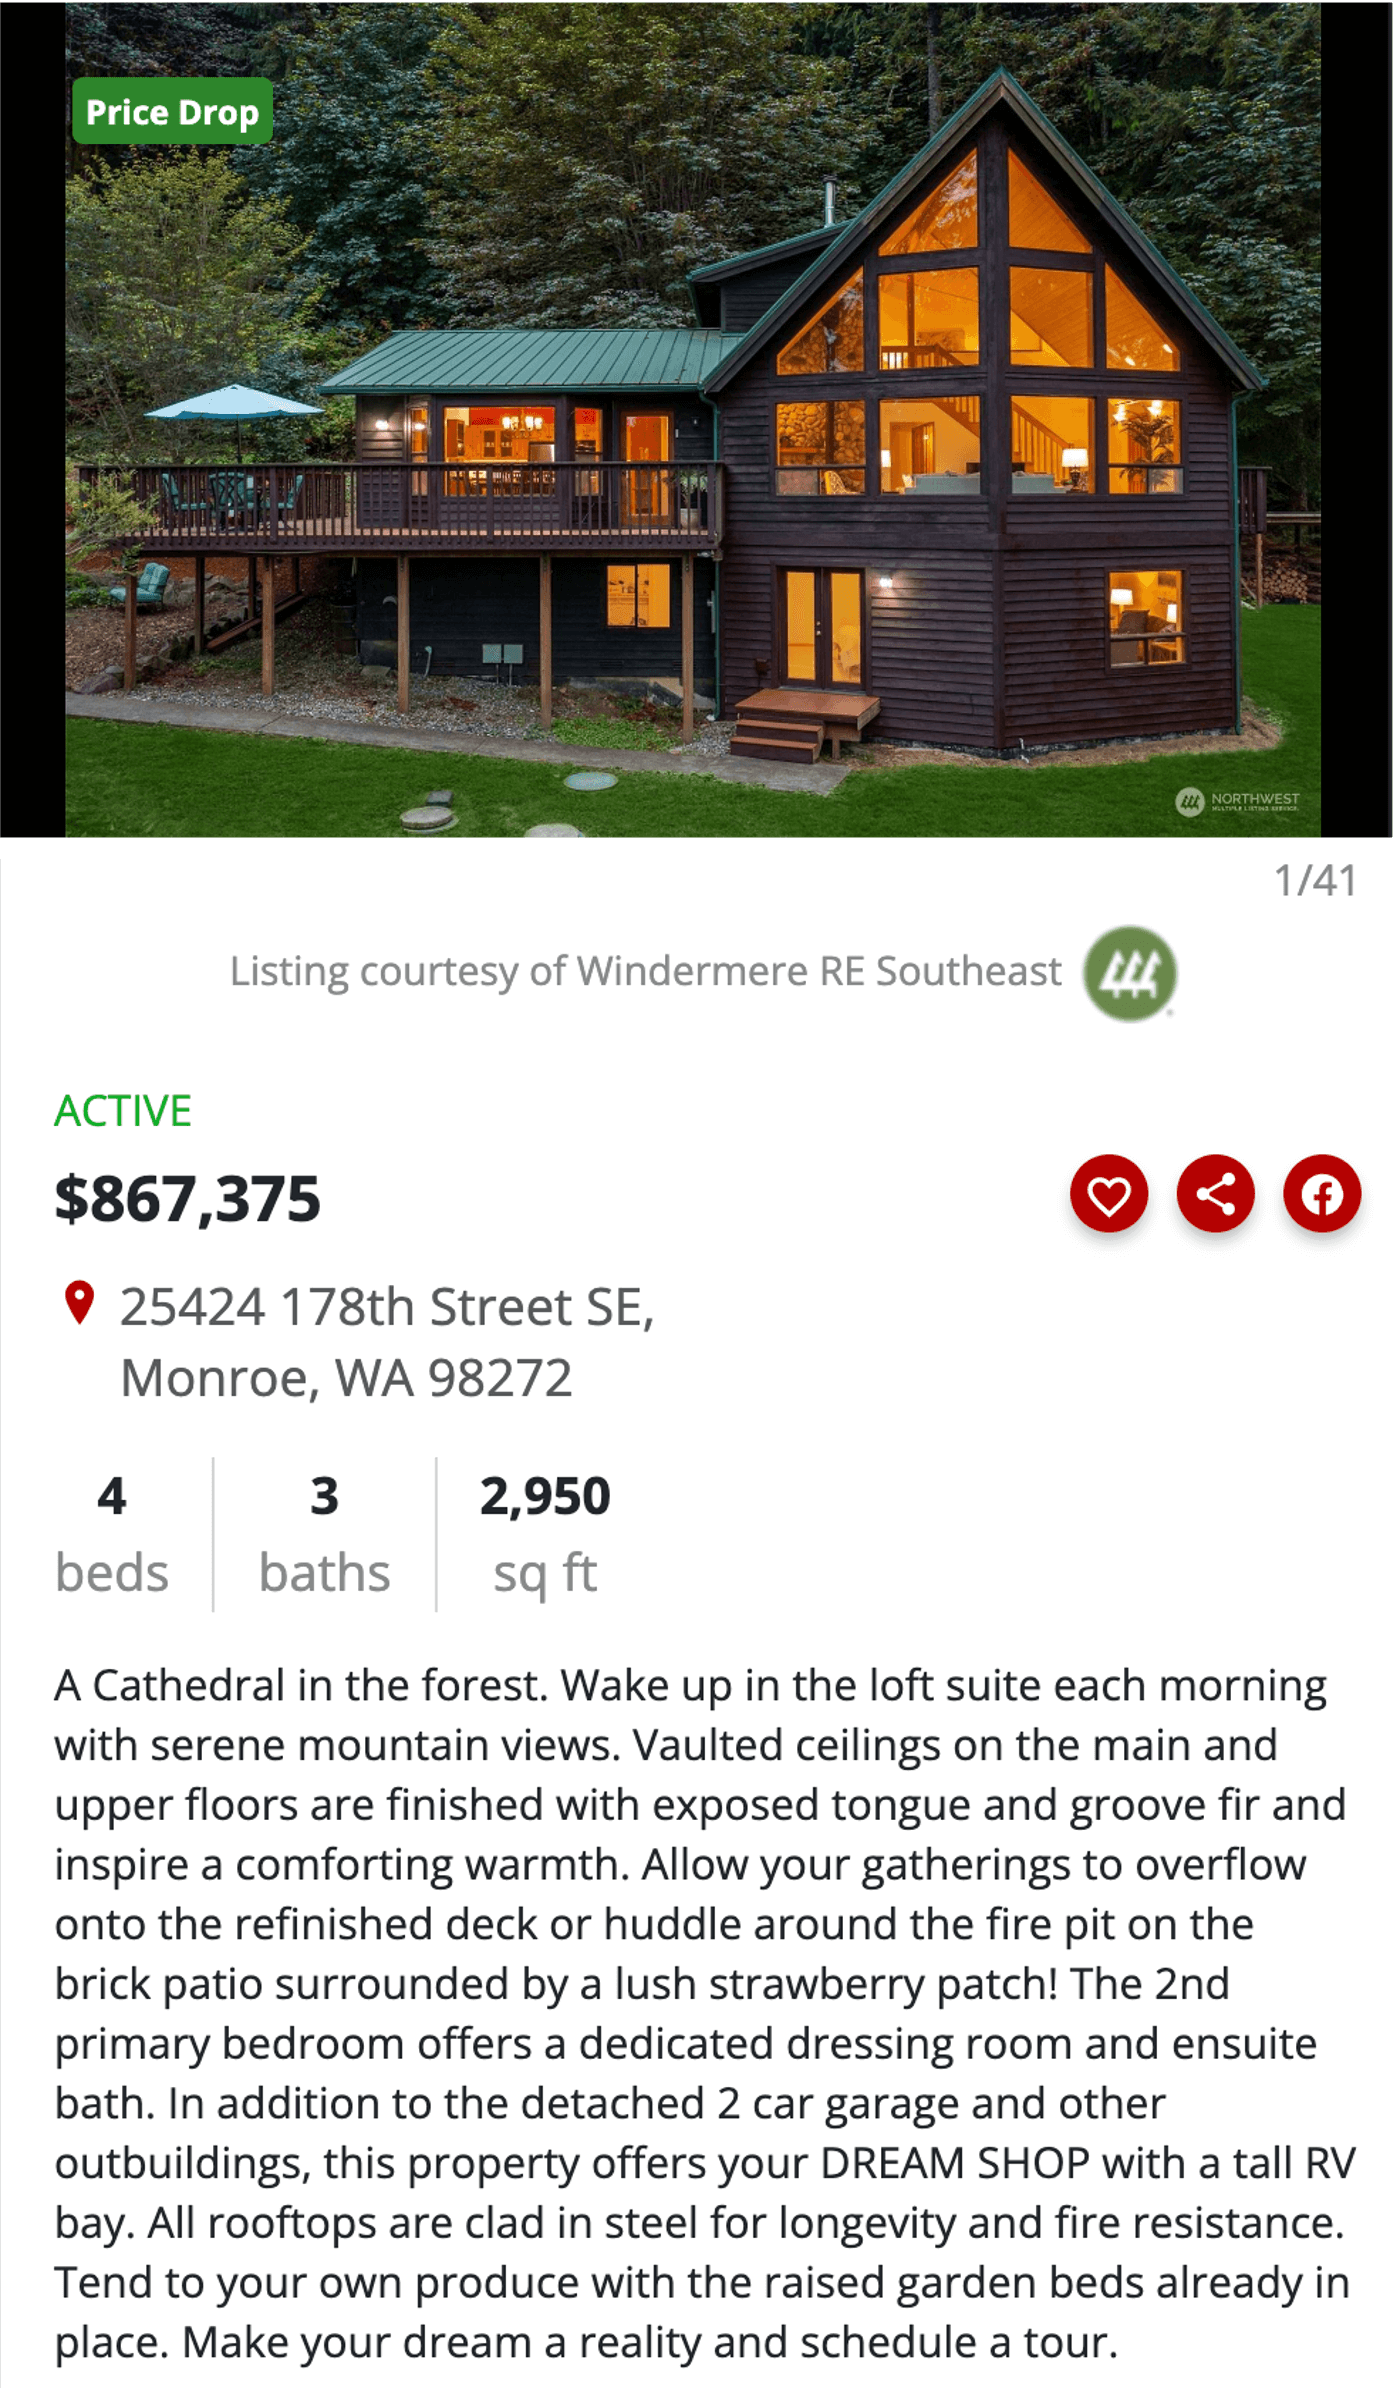 Real estate listing description example #1